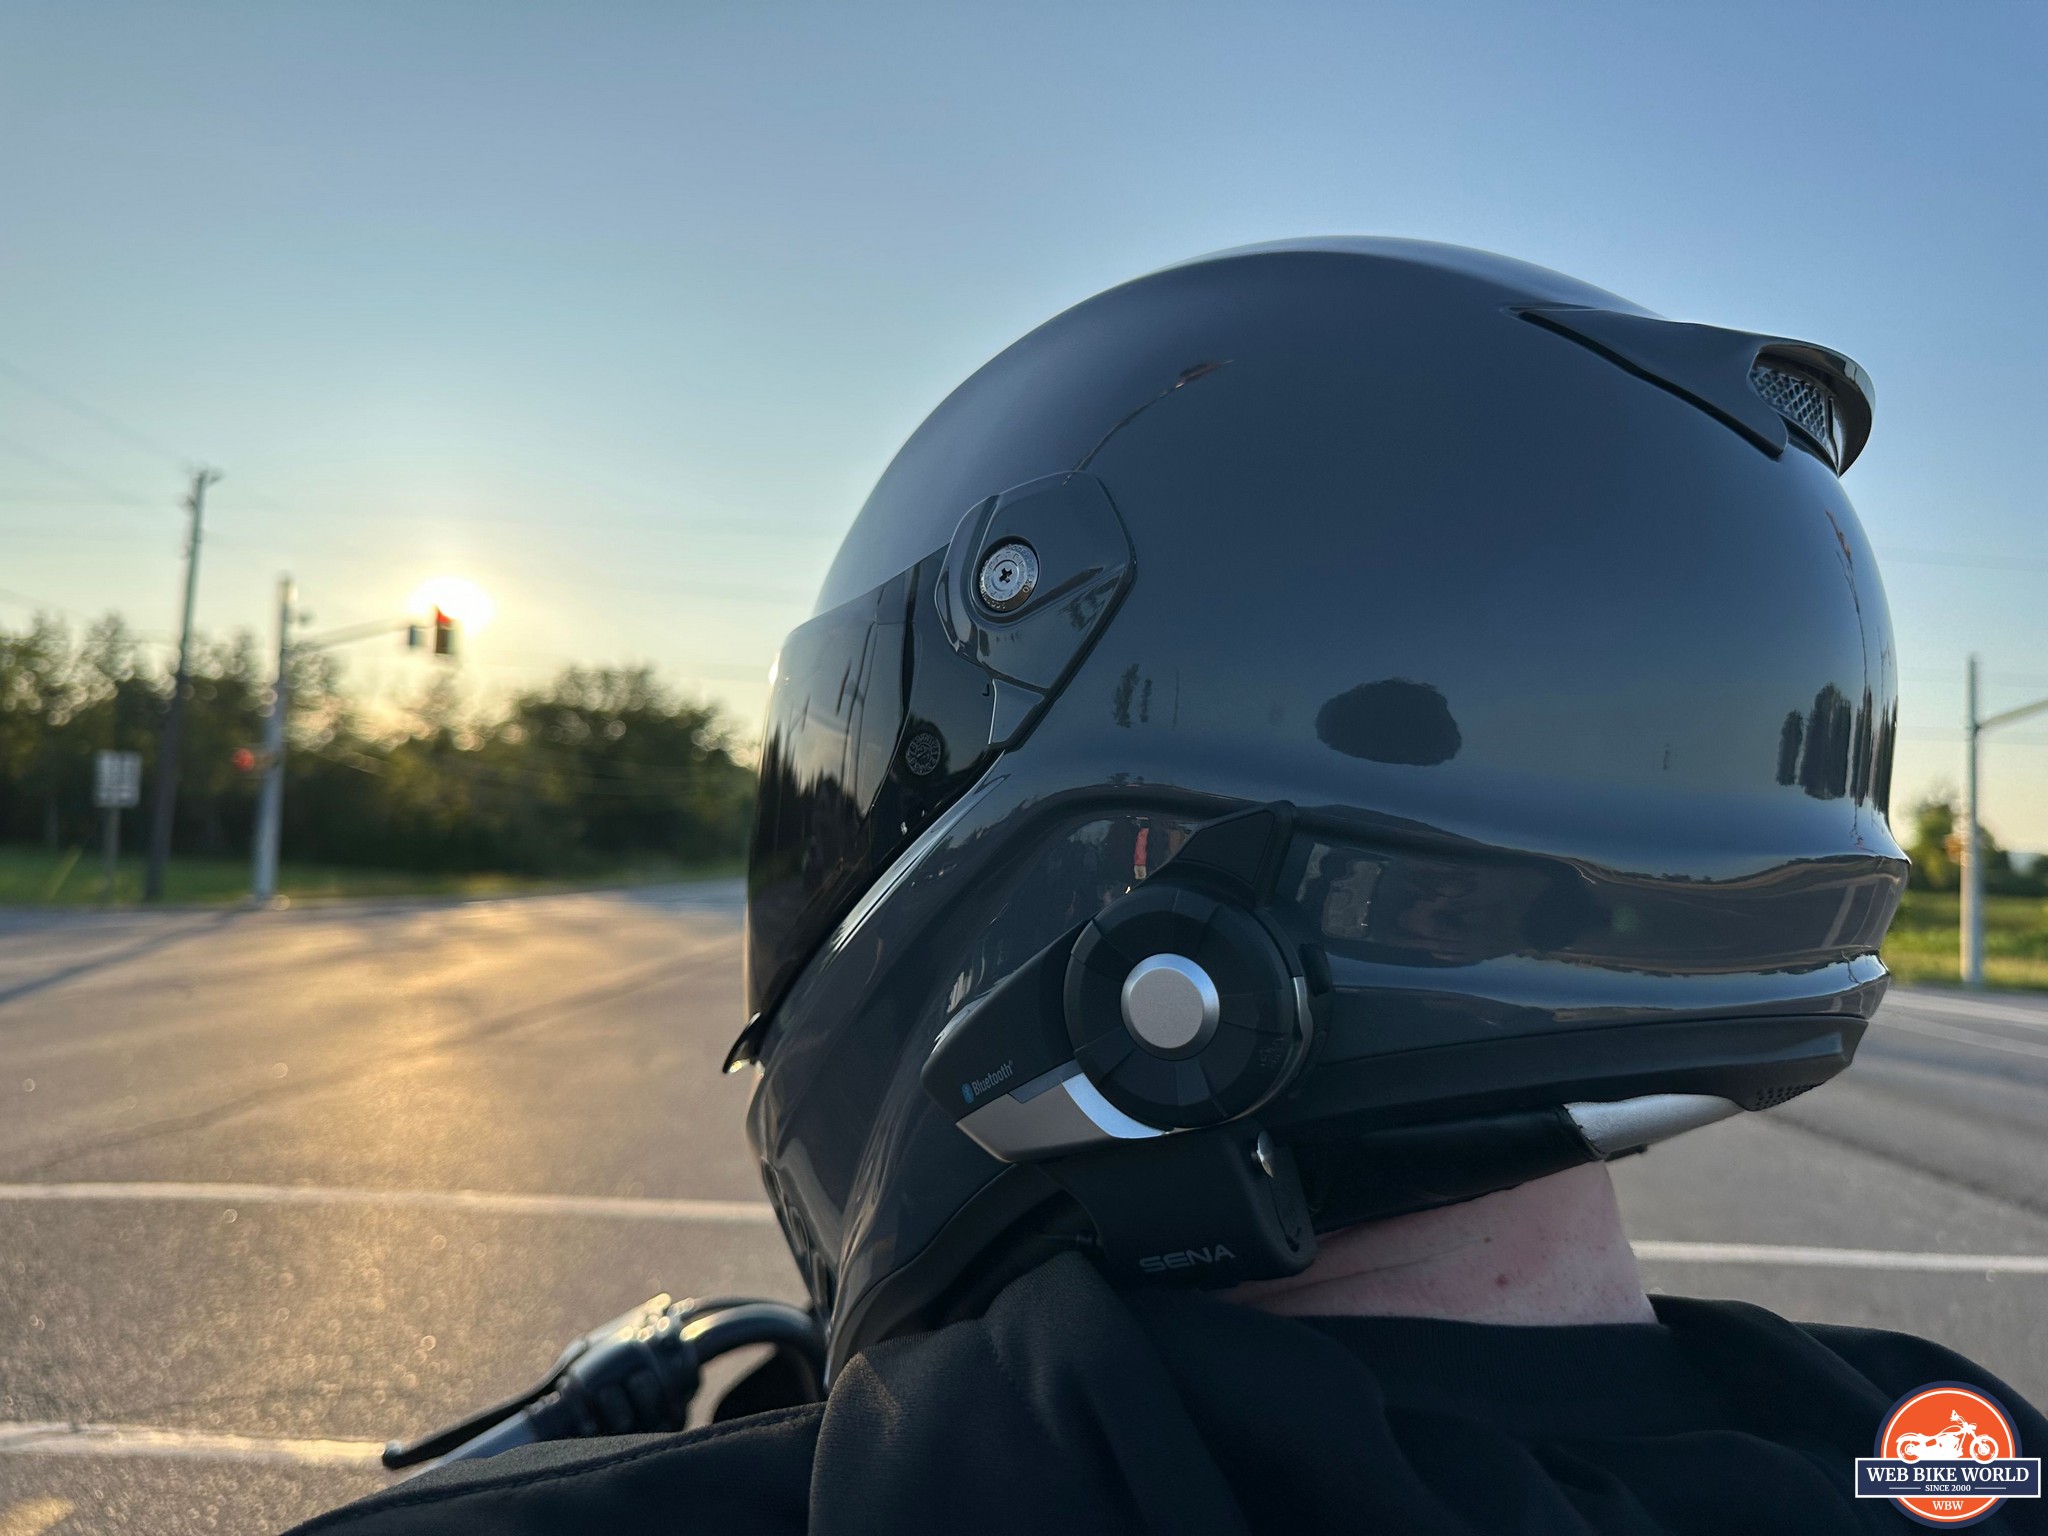 Sena Intercom system installed on a Scorpion Covert FX helmet